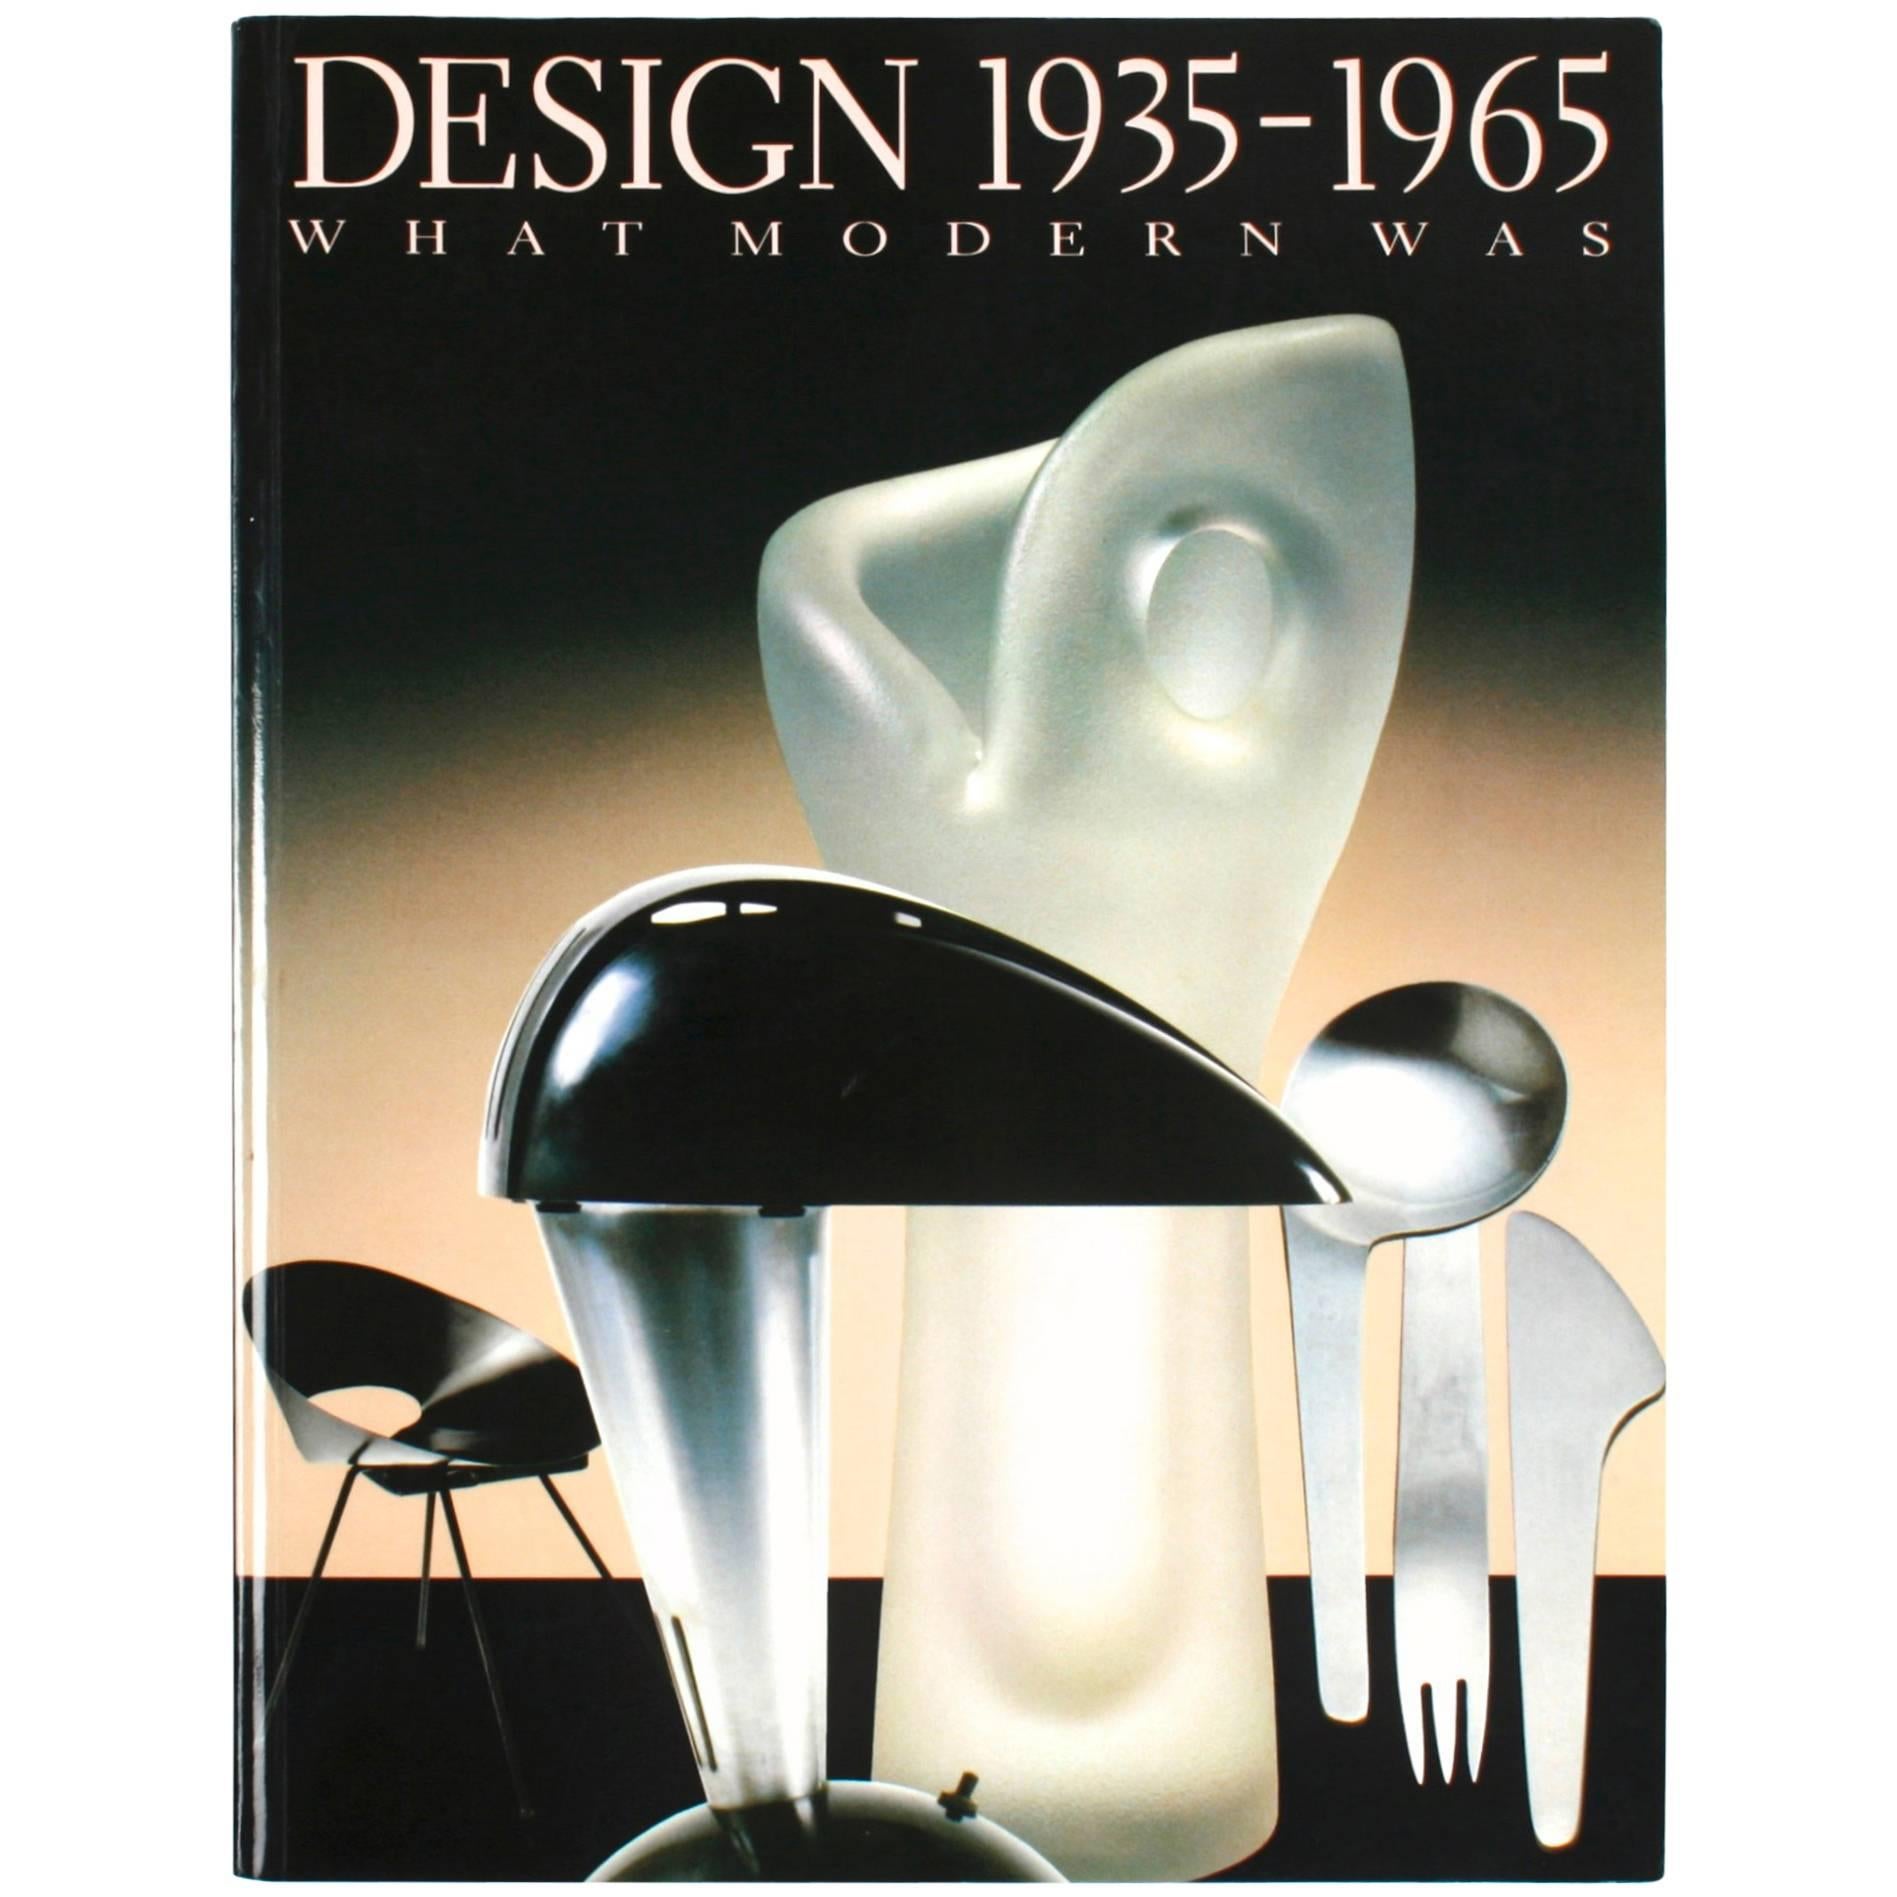 Design 1935-1965: What Modern Was, First Edition